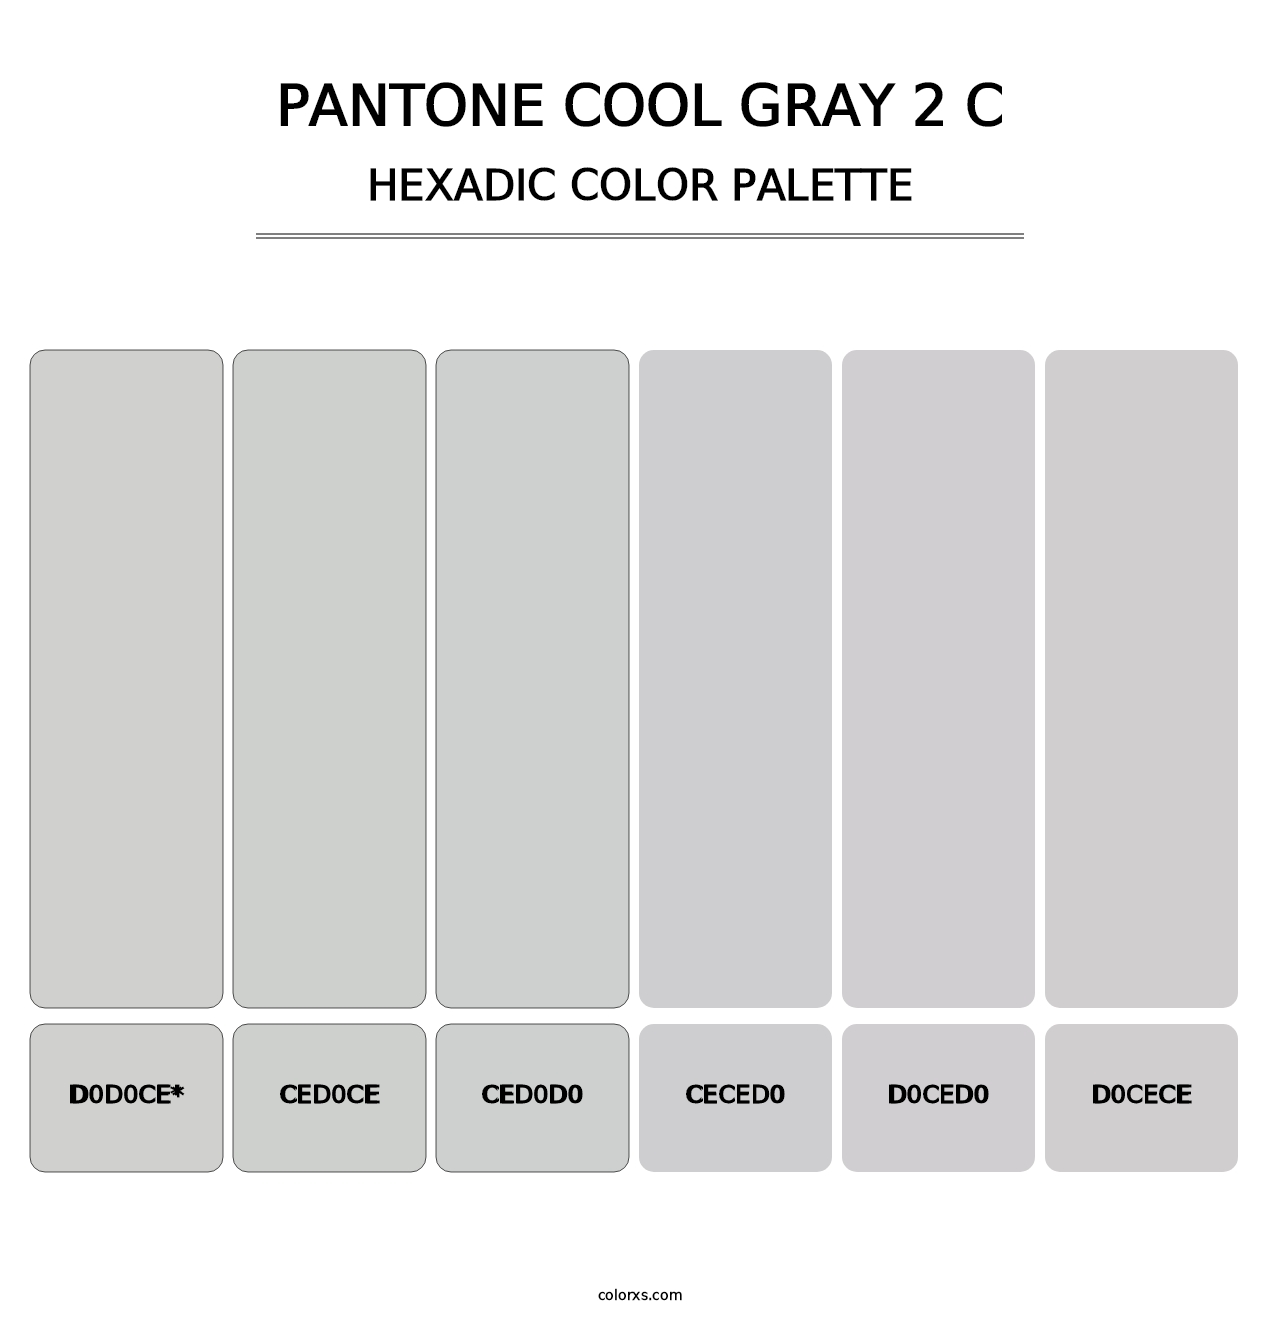 PANTONE Cool Gray 2 C - Hexadic Color Palette